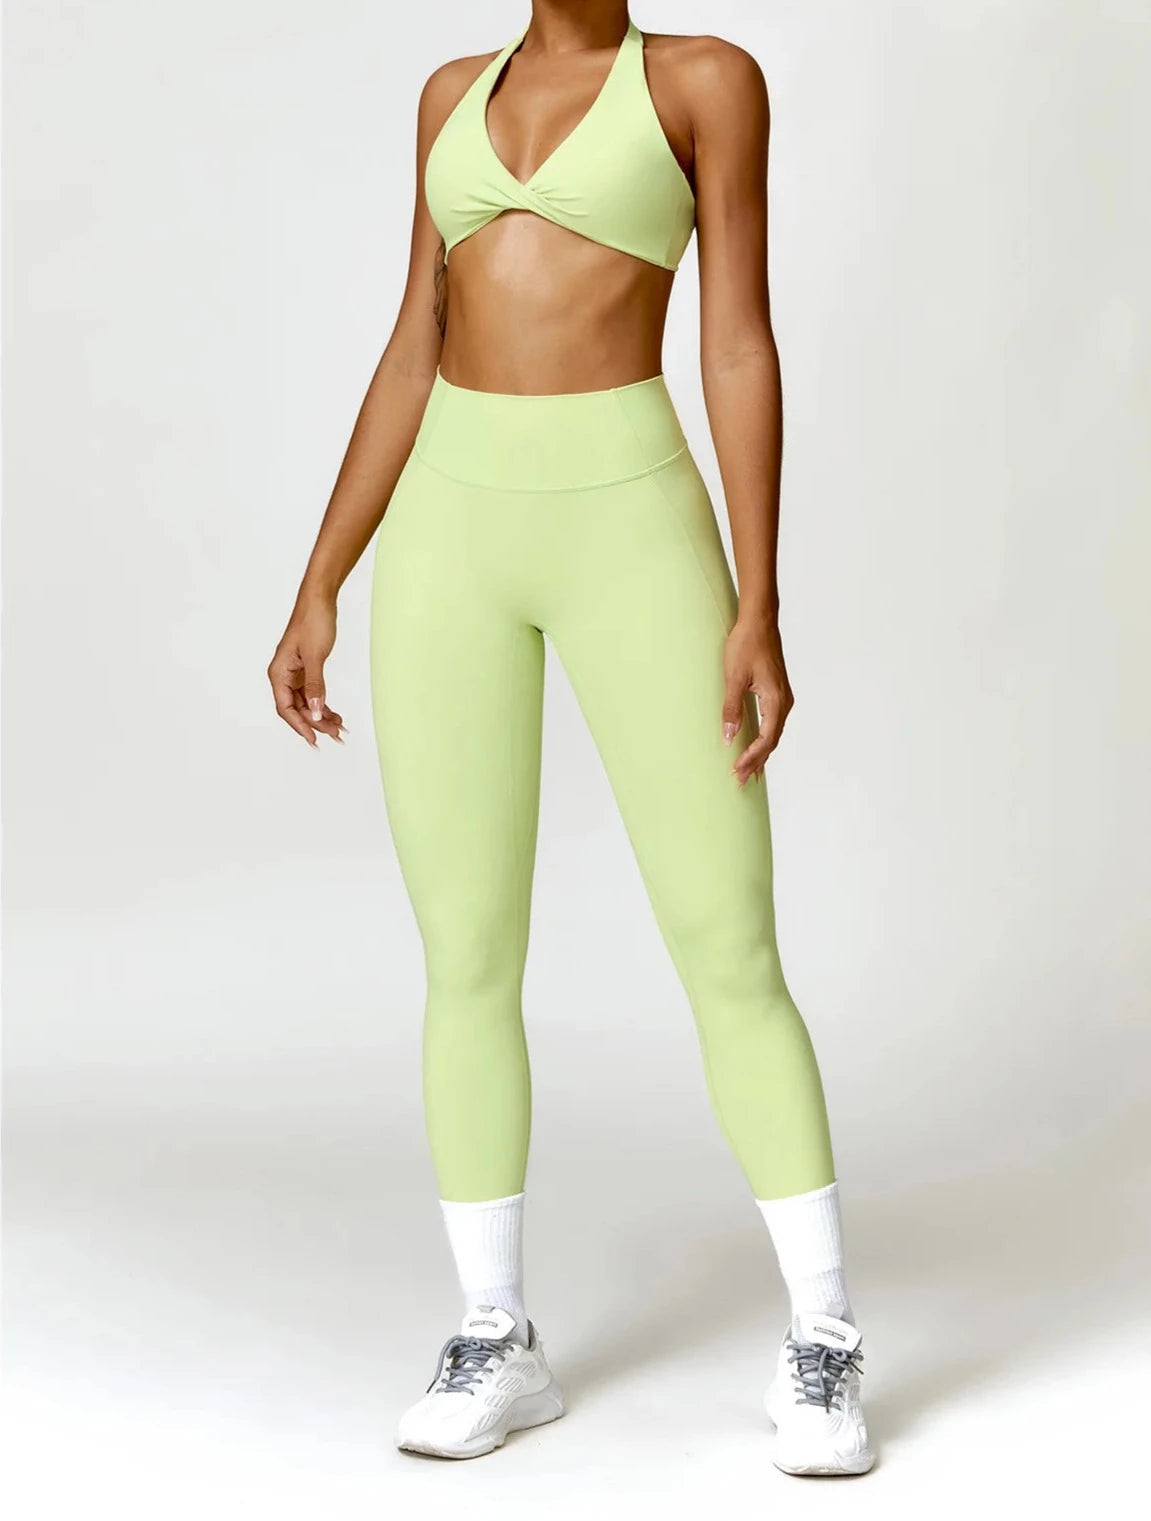 Glam Flow Yoga Set - Leggings + Top Sets Starlethics Yellow Green S 